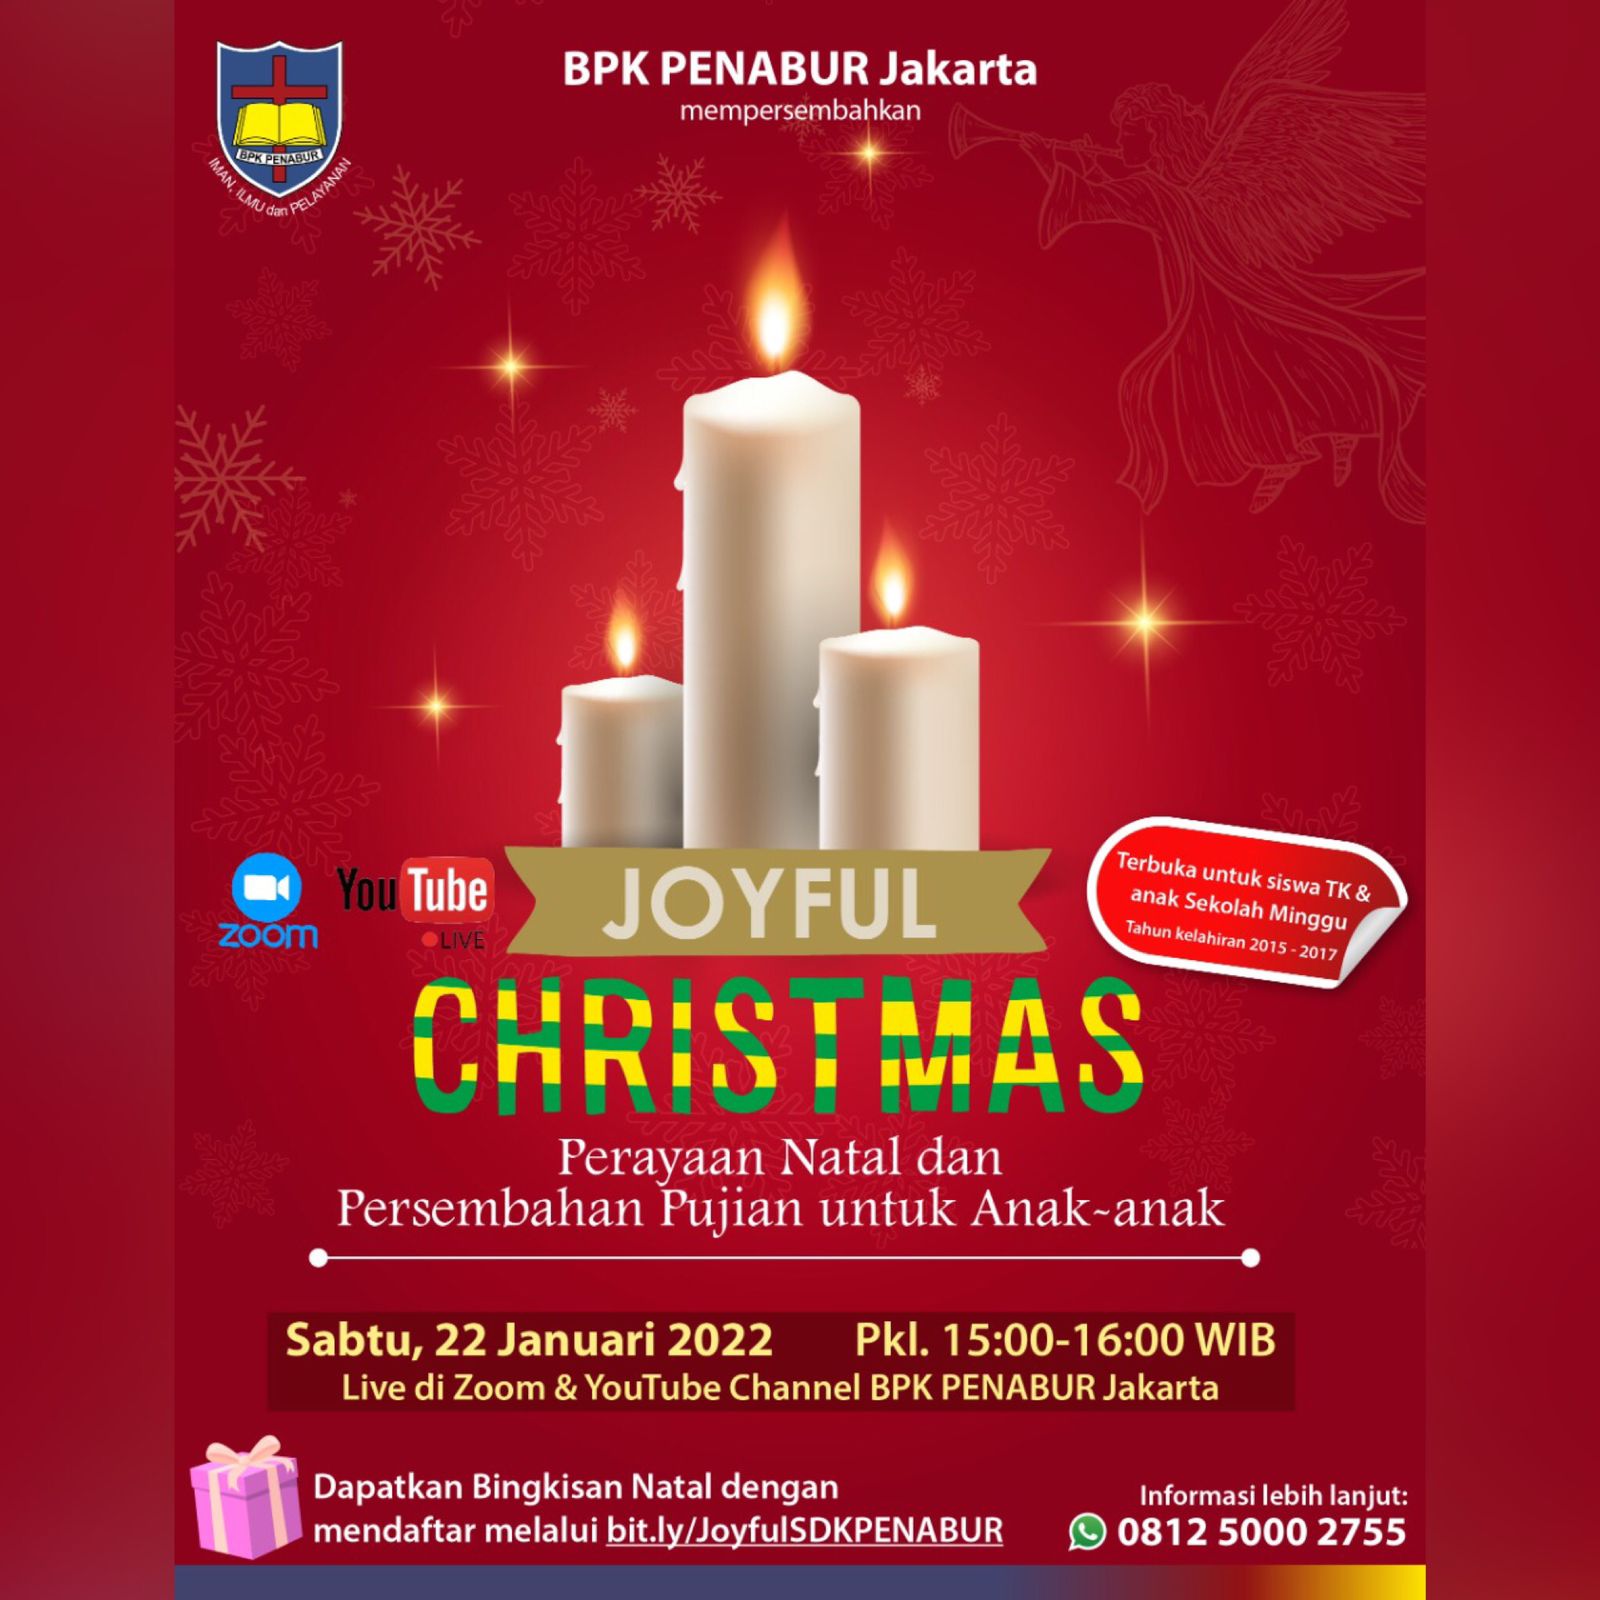 BPK PENABUR Jakarta "Joyful Christmas"